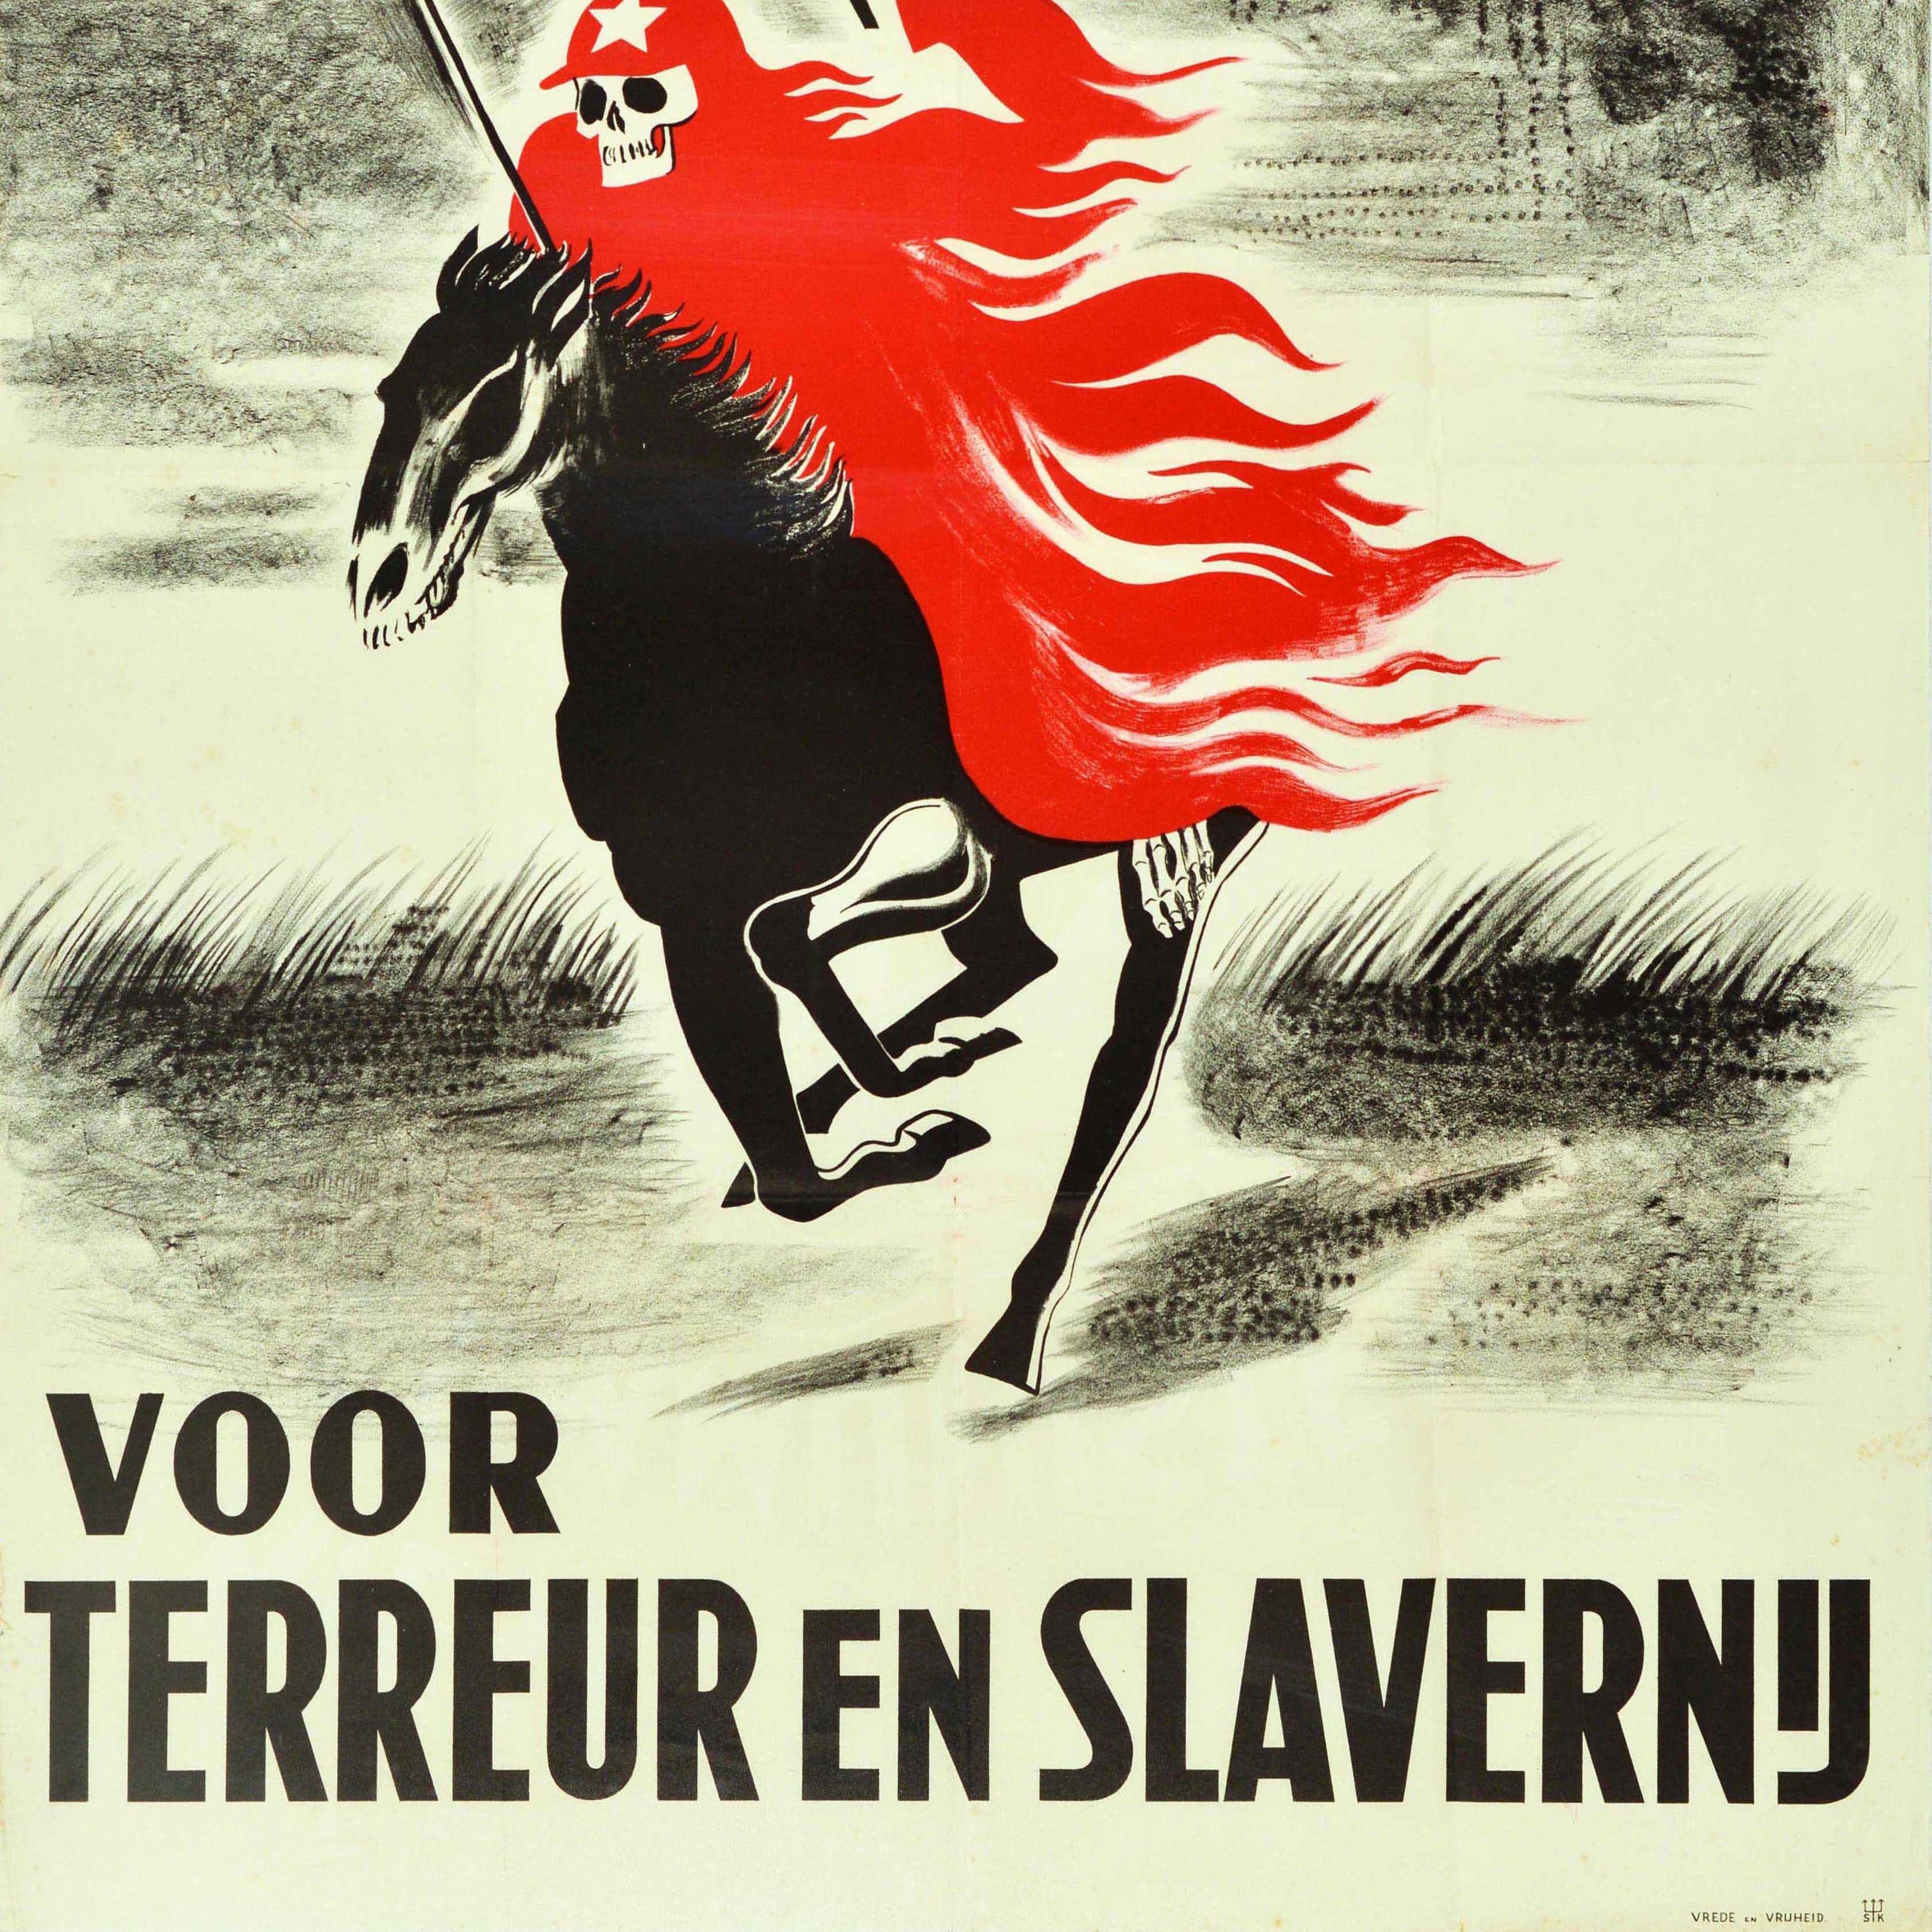 Original Vintage Dutch Election Propaganda Poster Communism Terror And Slavery - Beige Print by Unknown